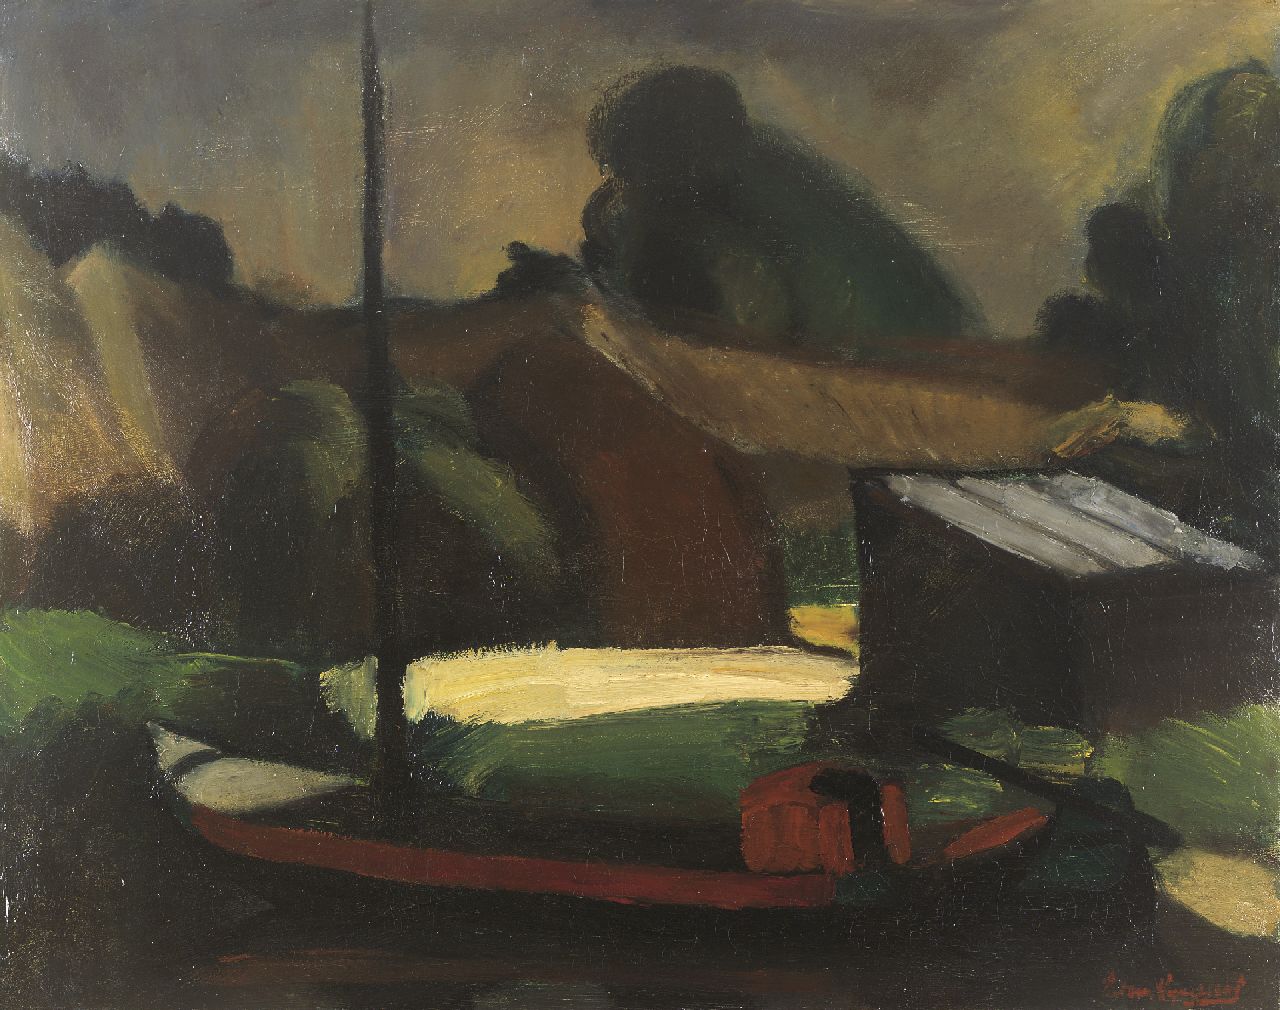 Wijngaerdt P.T. van | Petrus Theodorus 'Piet' van Wijngaerdt, Boat by a barn, oil on canvas 80.4 x 101.4 cm, signed l.r. and painted ca. 1918